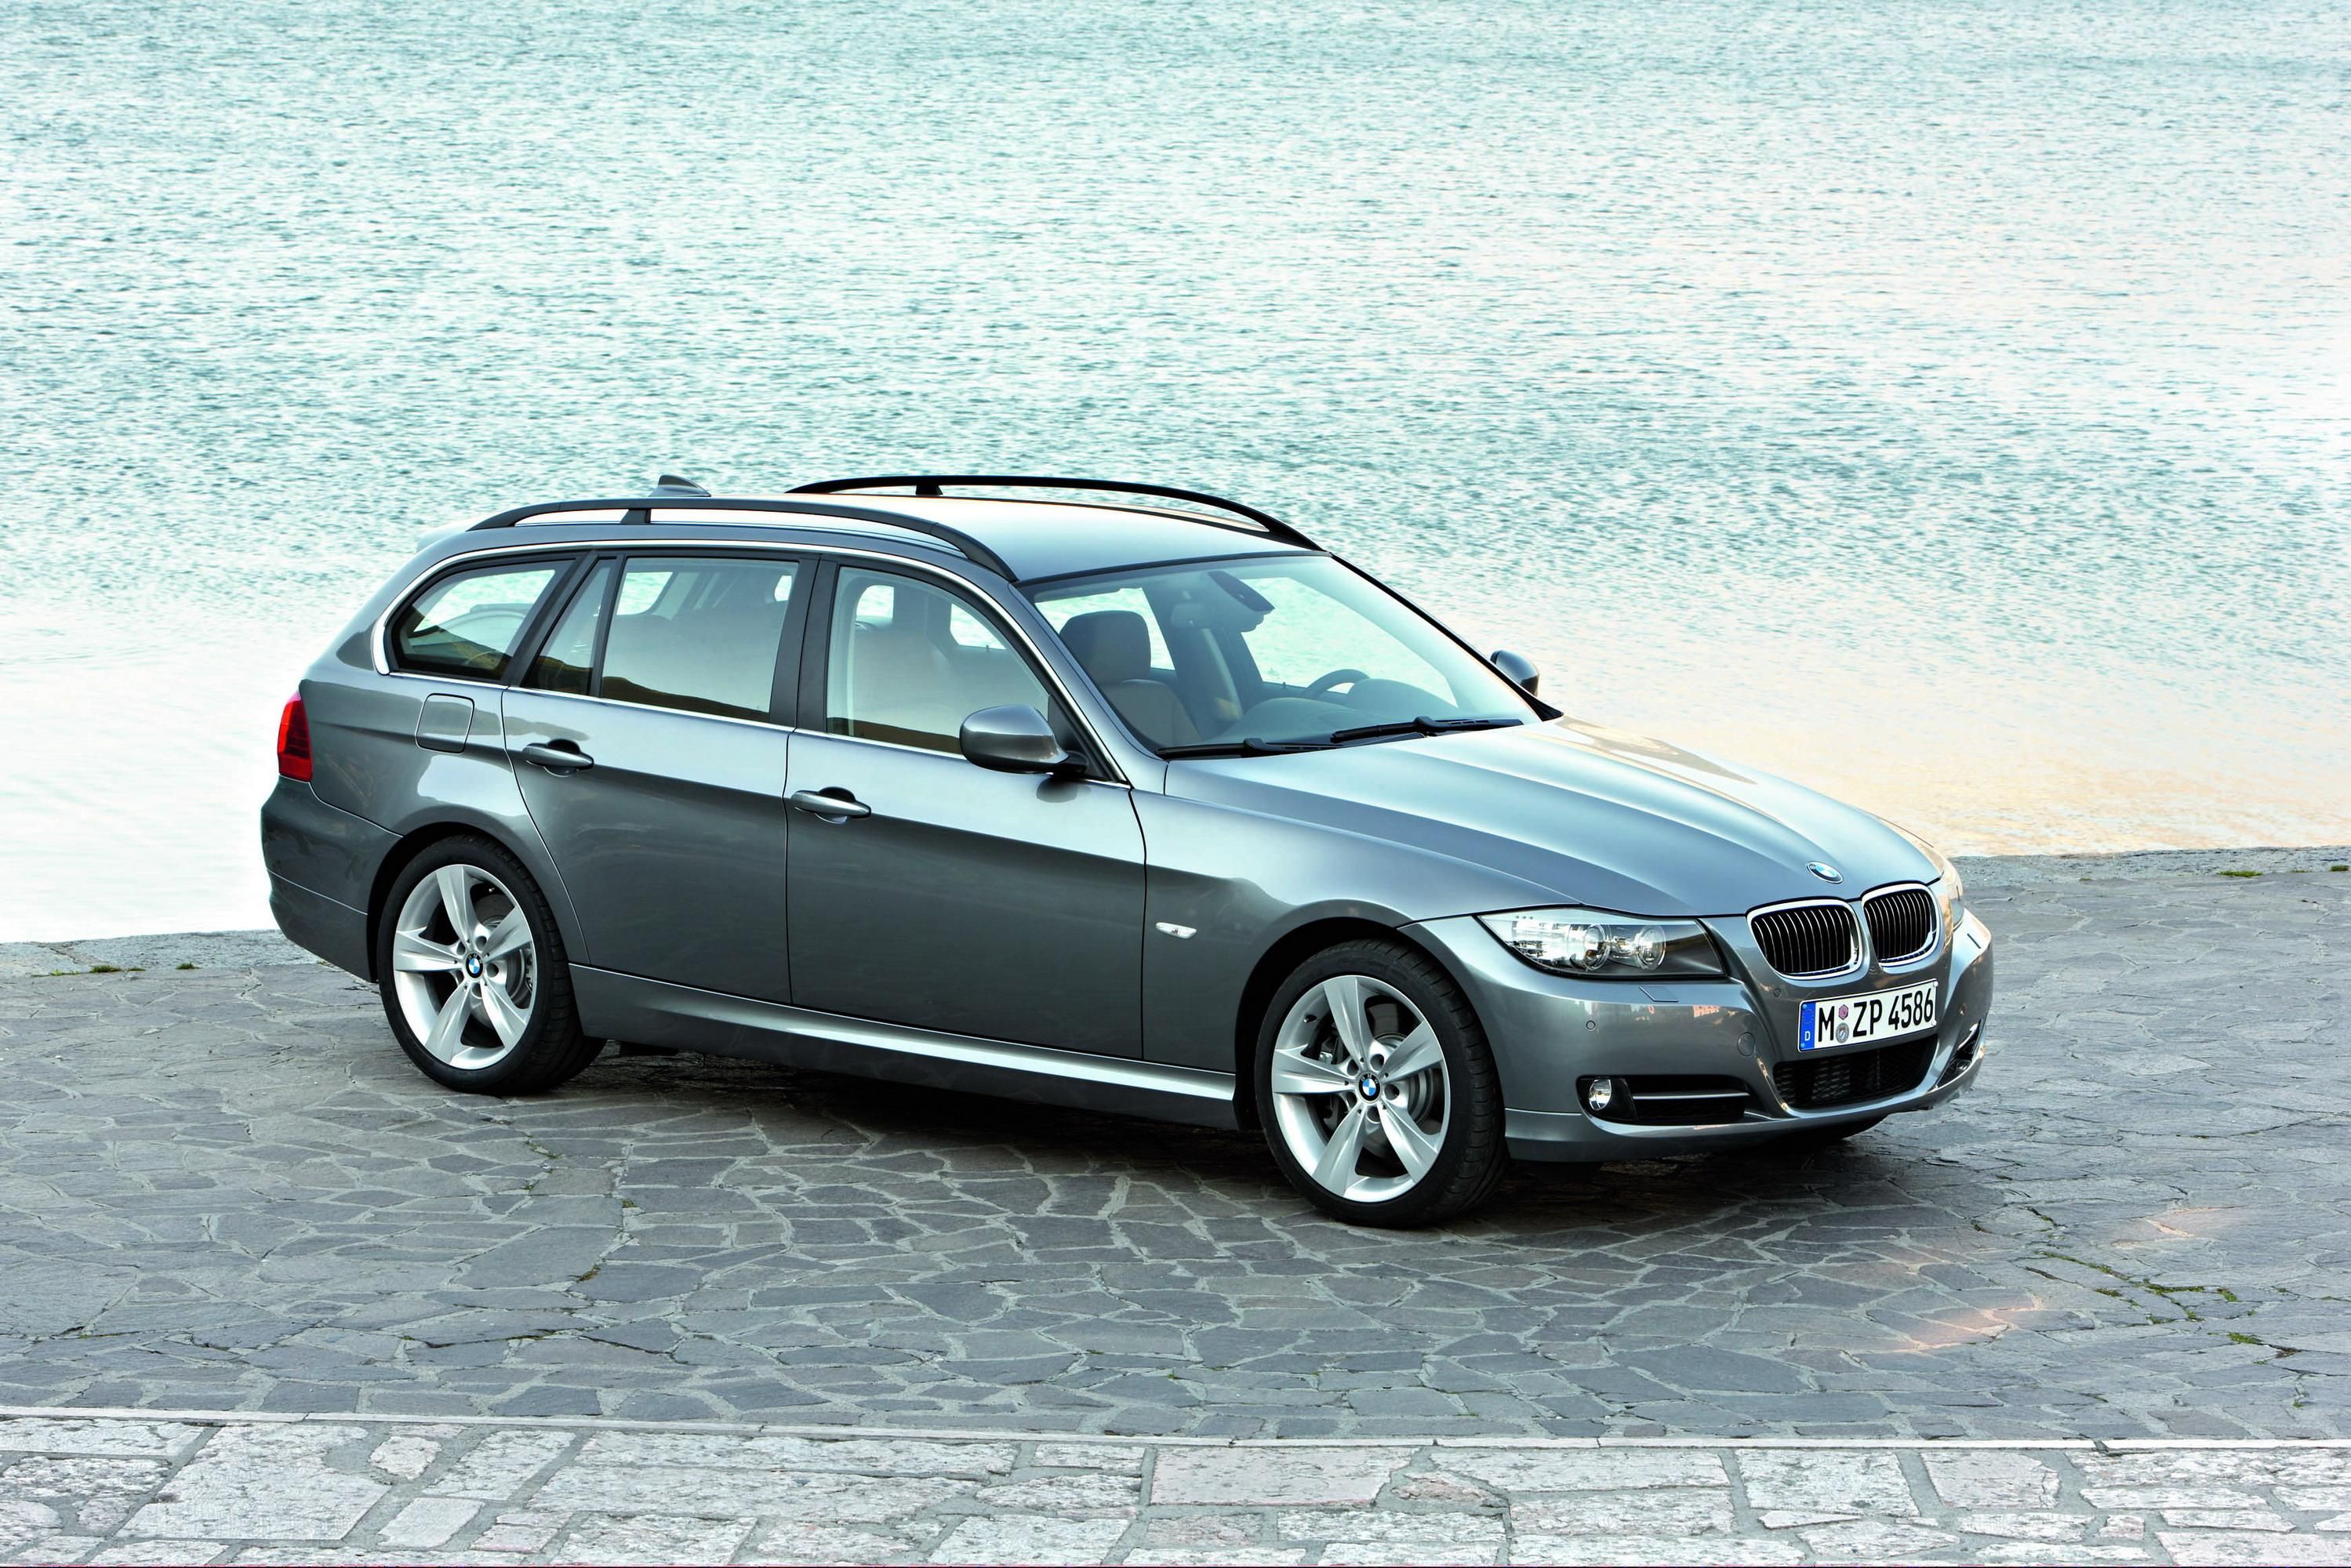 2009 BMW 3-Series